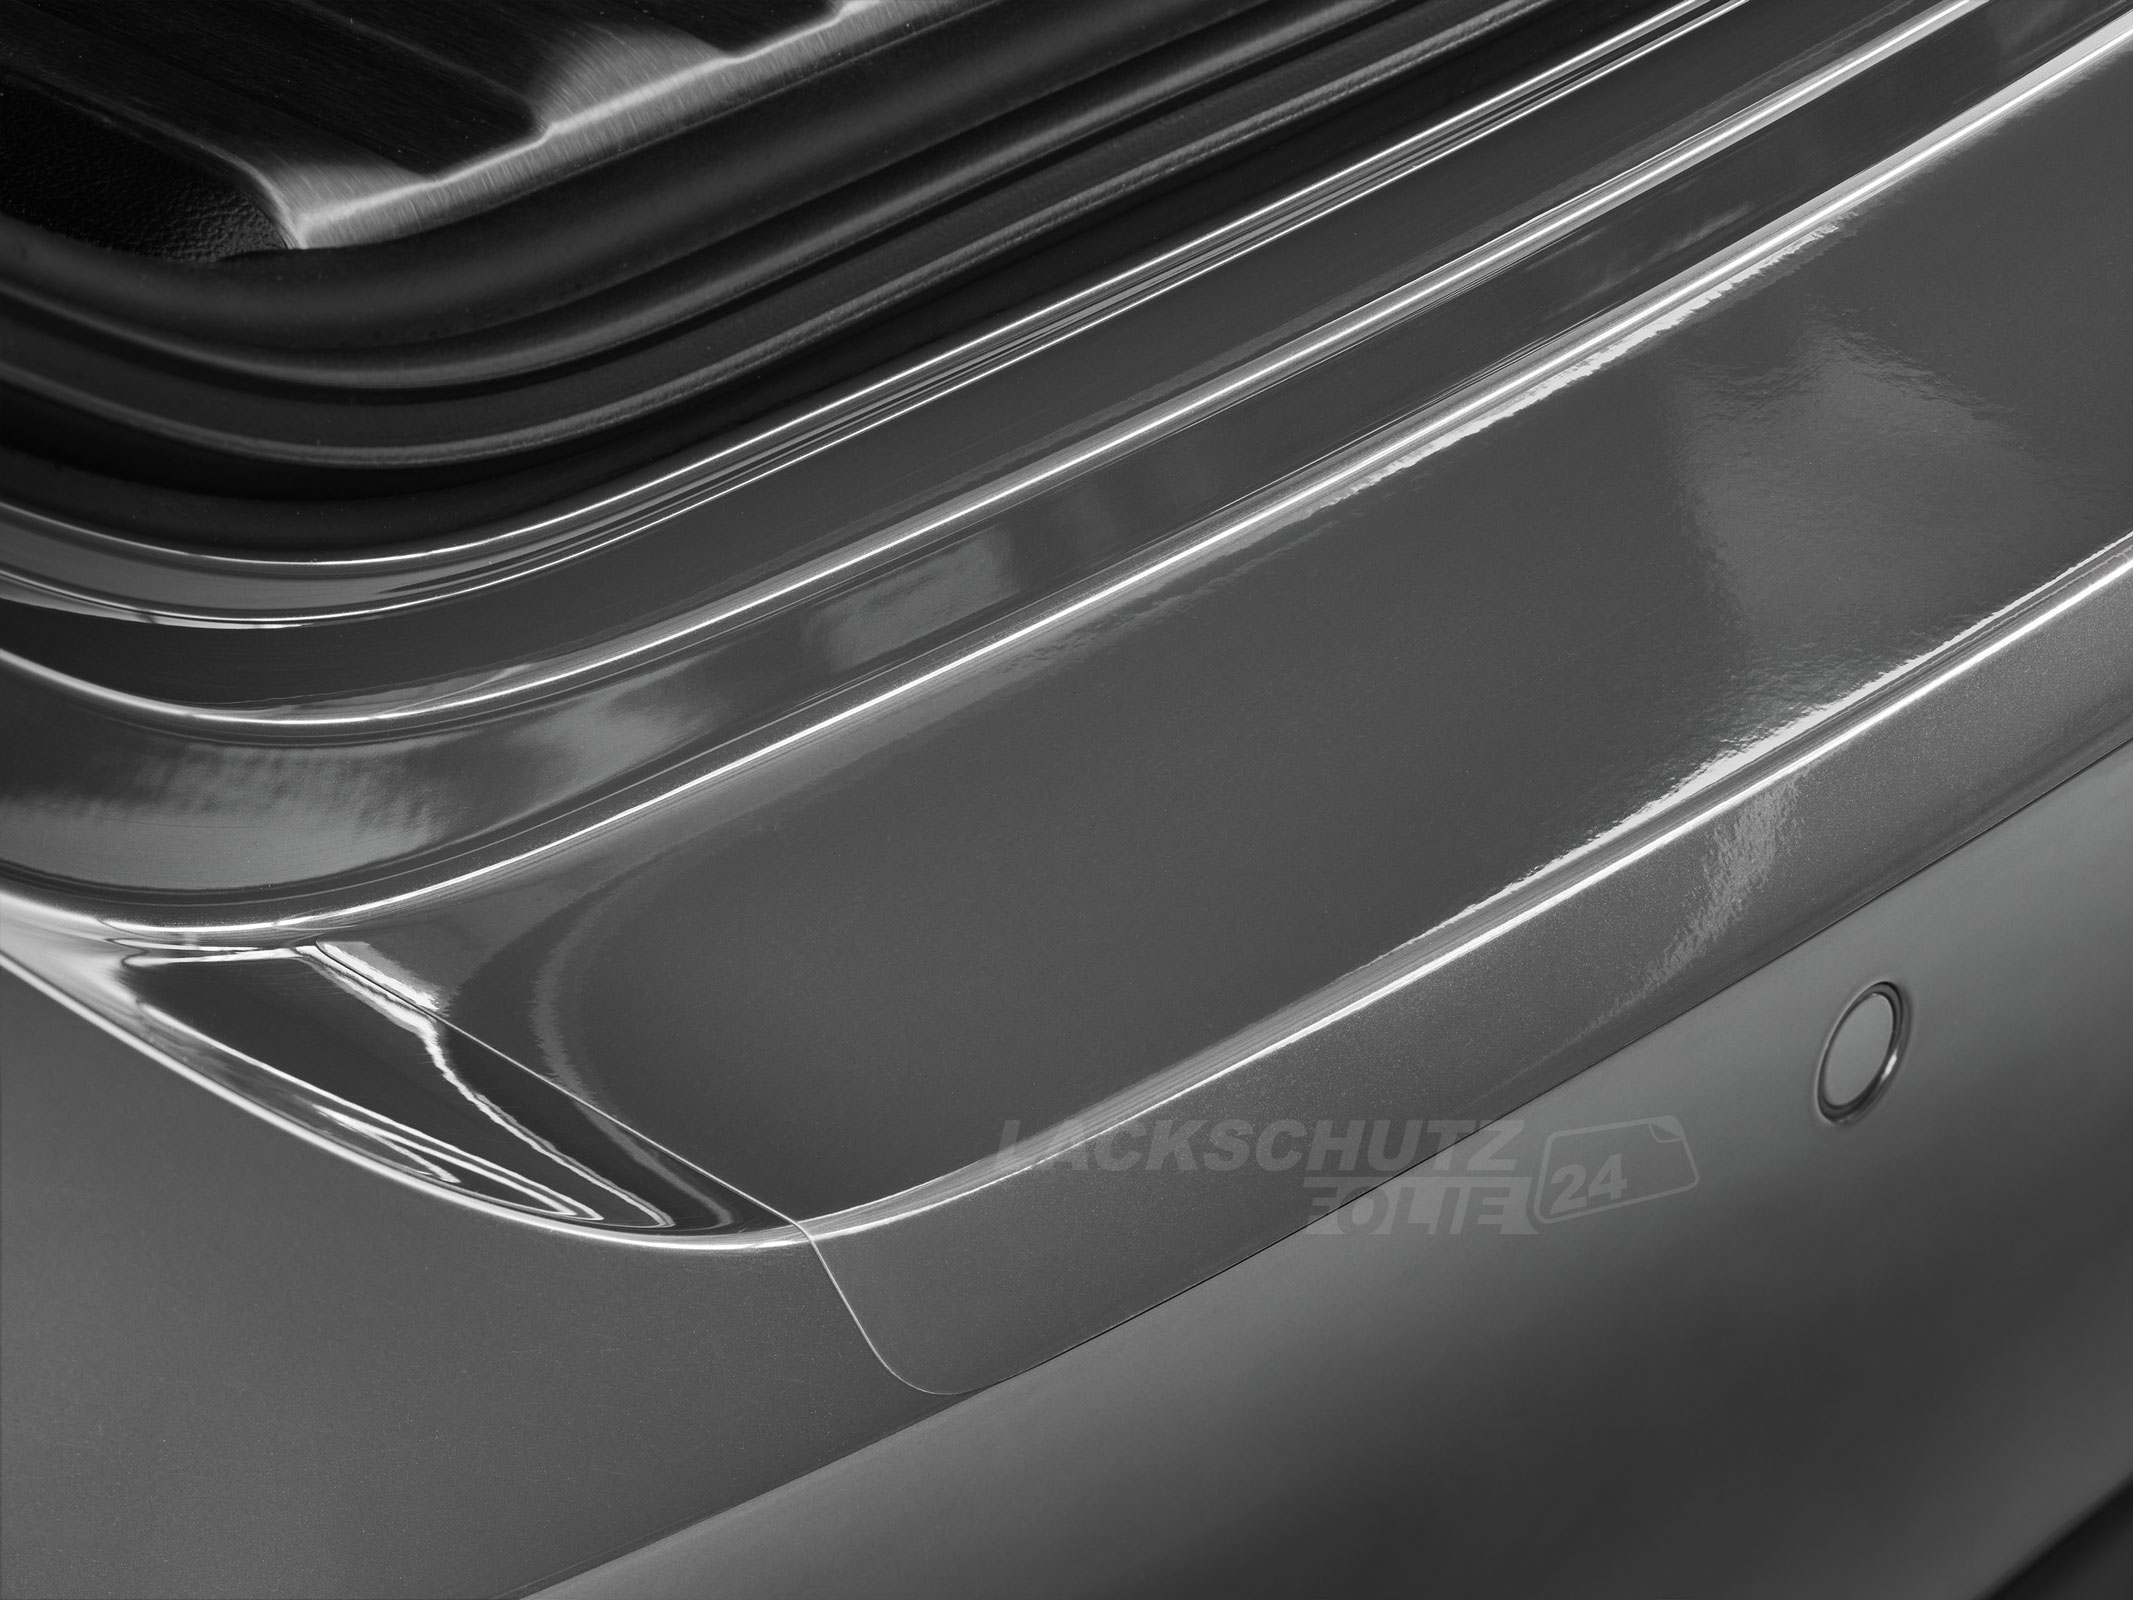 Ladekantenschutzfolie - Transparent Glatt Hochglänzend 150 µm stark für Volvo V70 Kombi Typ B, Facelift BJ 2013-2016